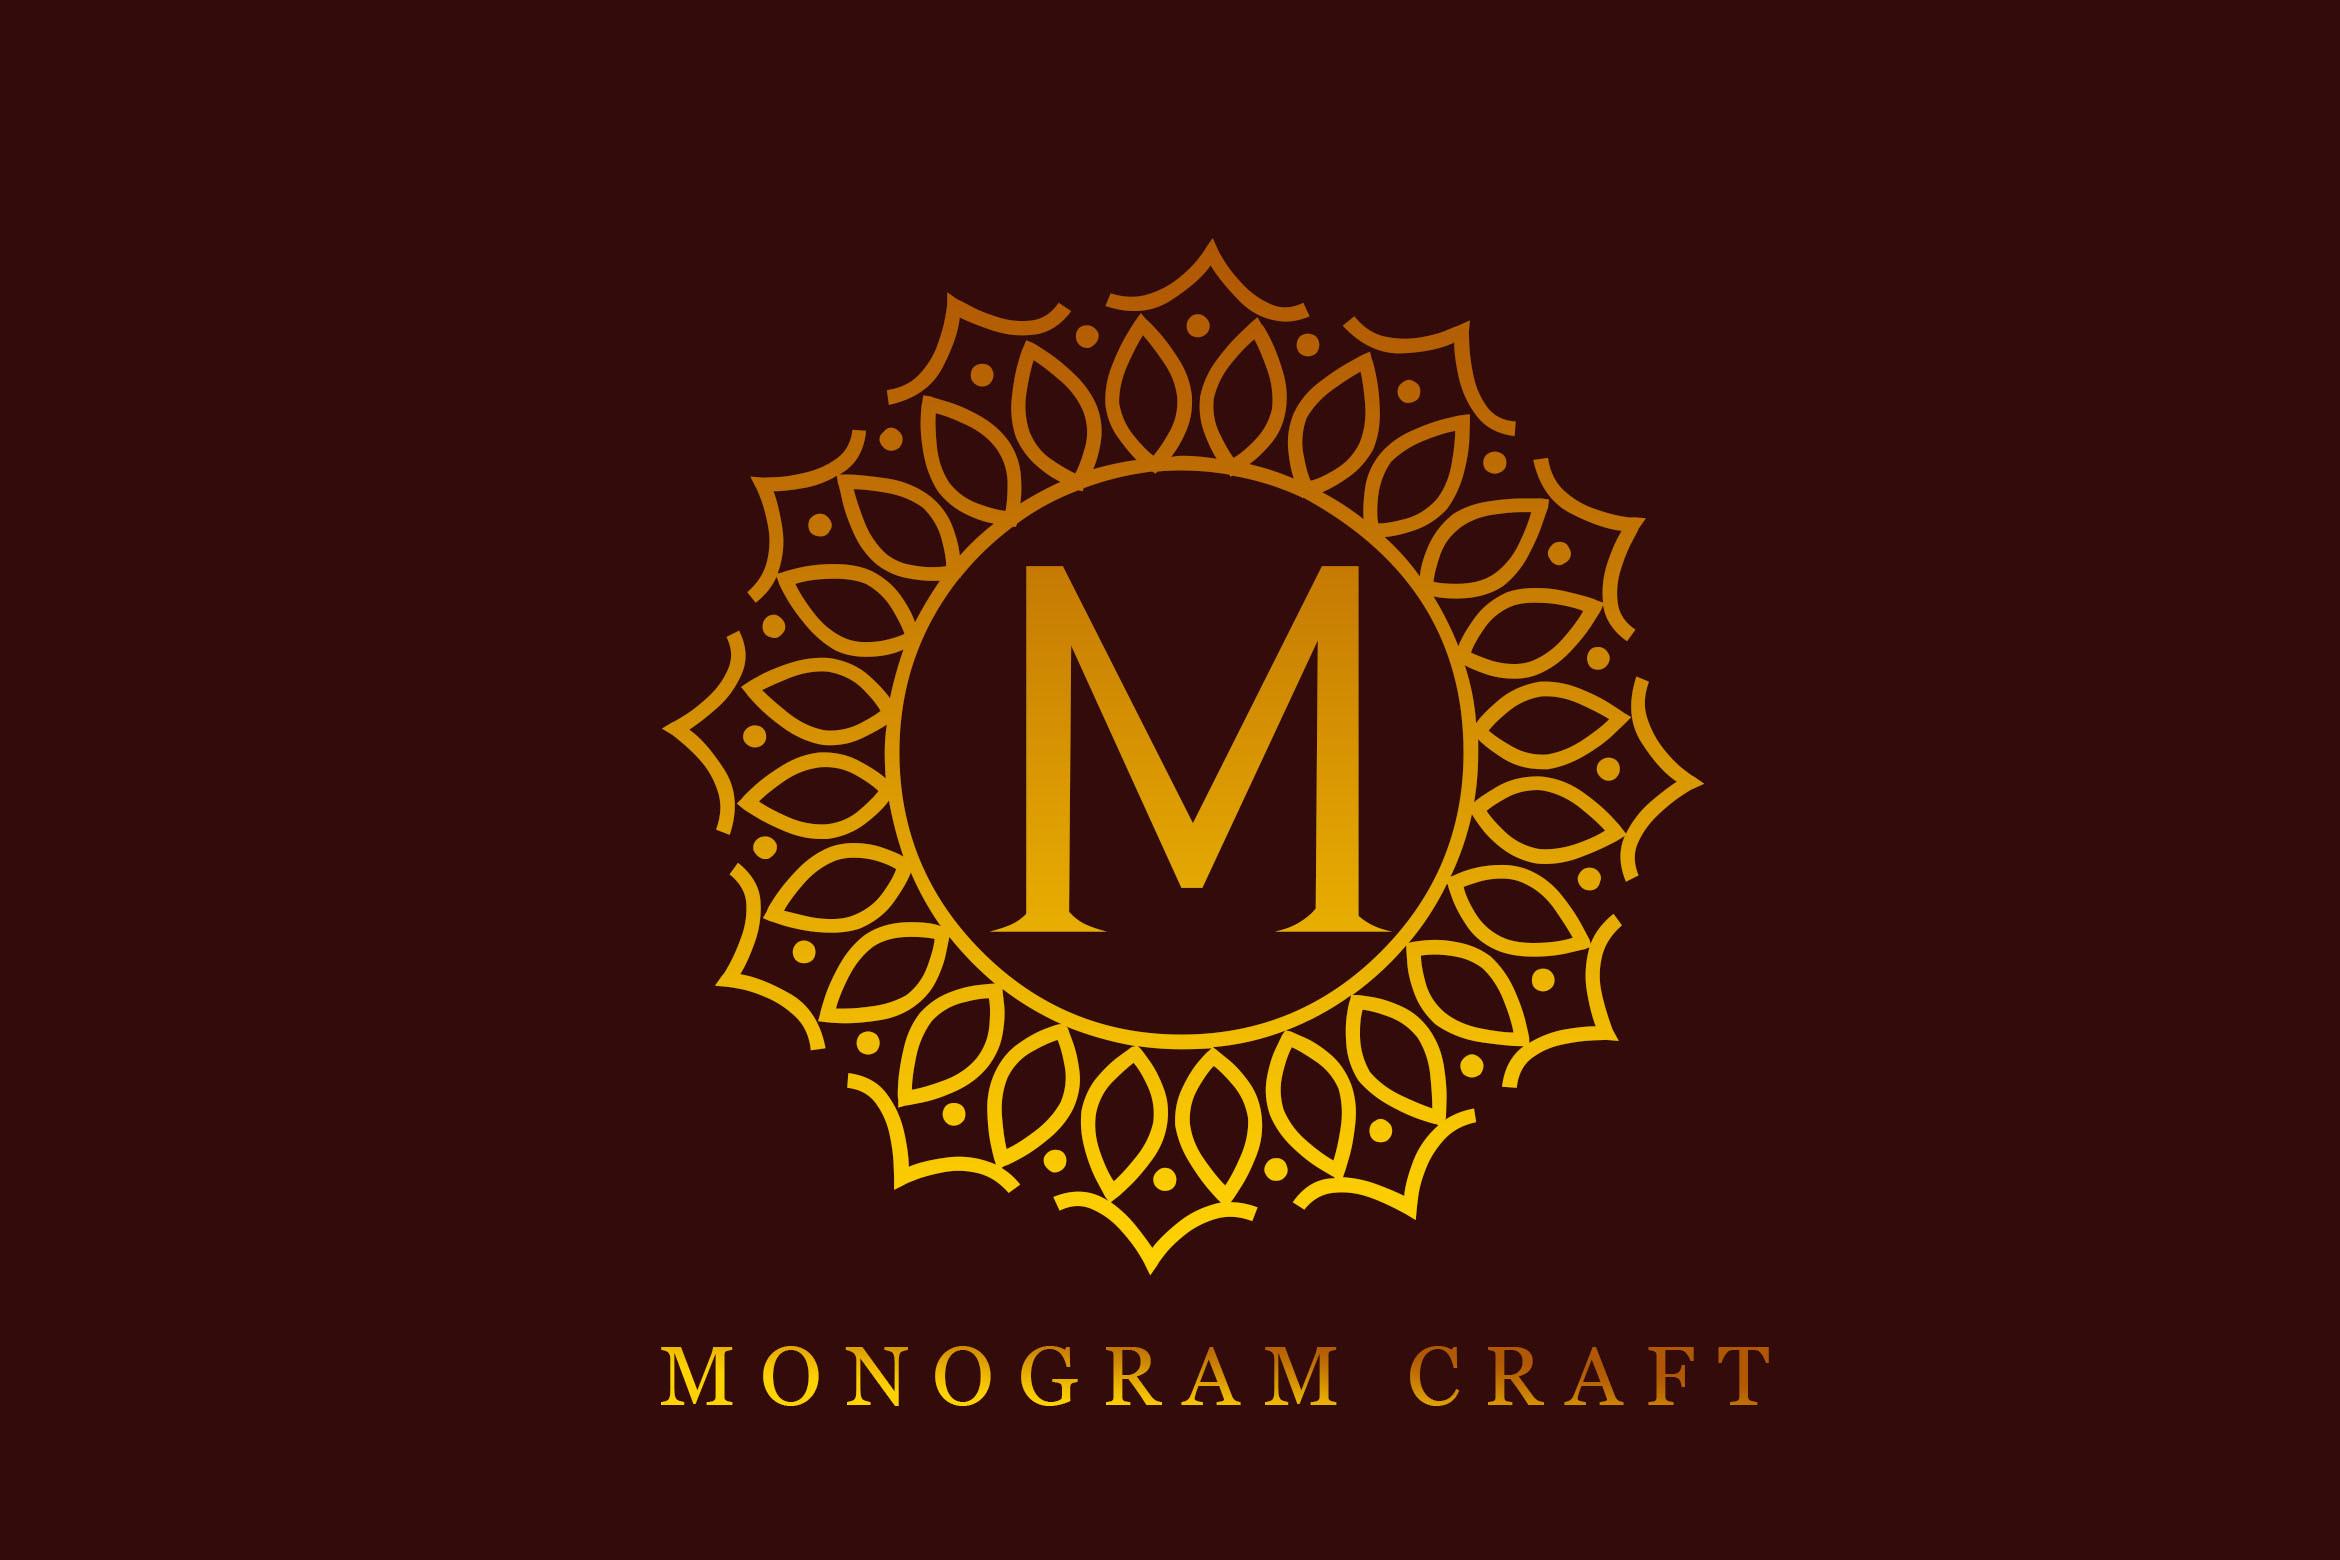 Monogram Craft Font